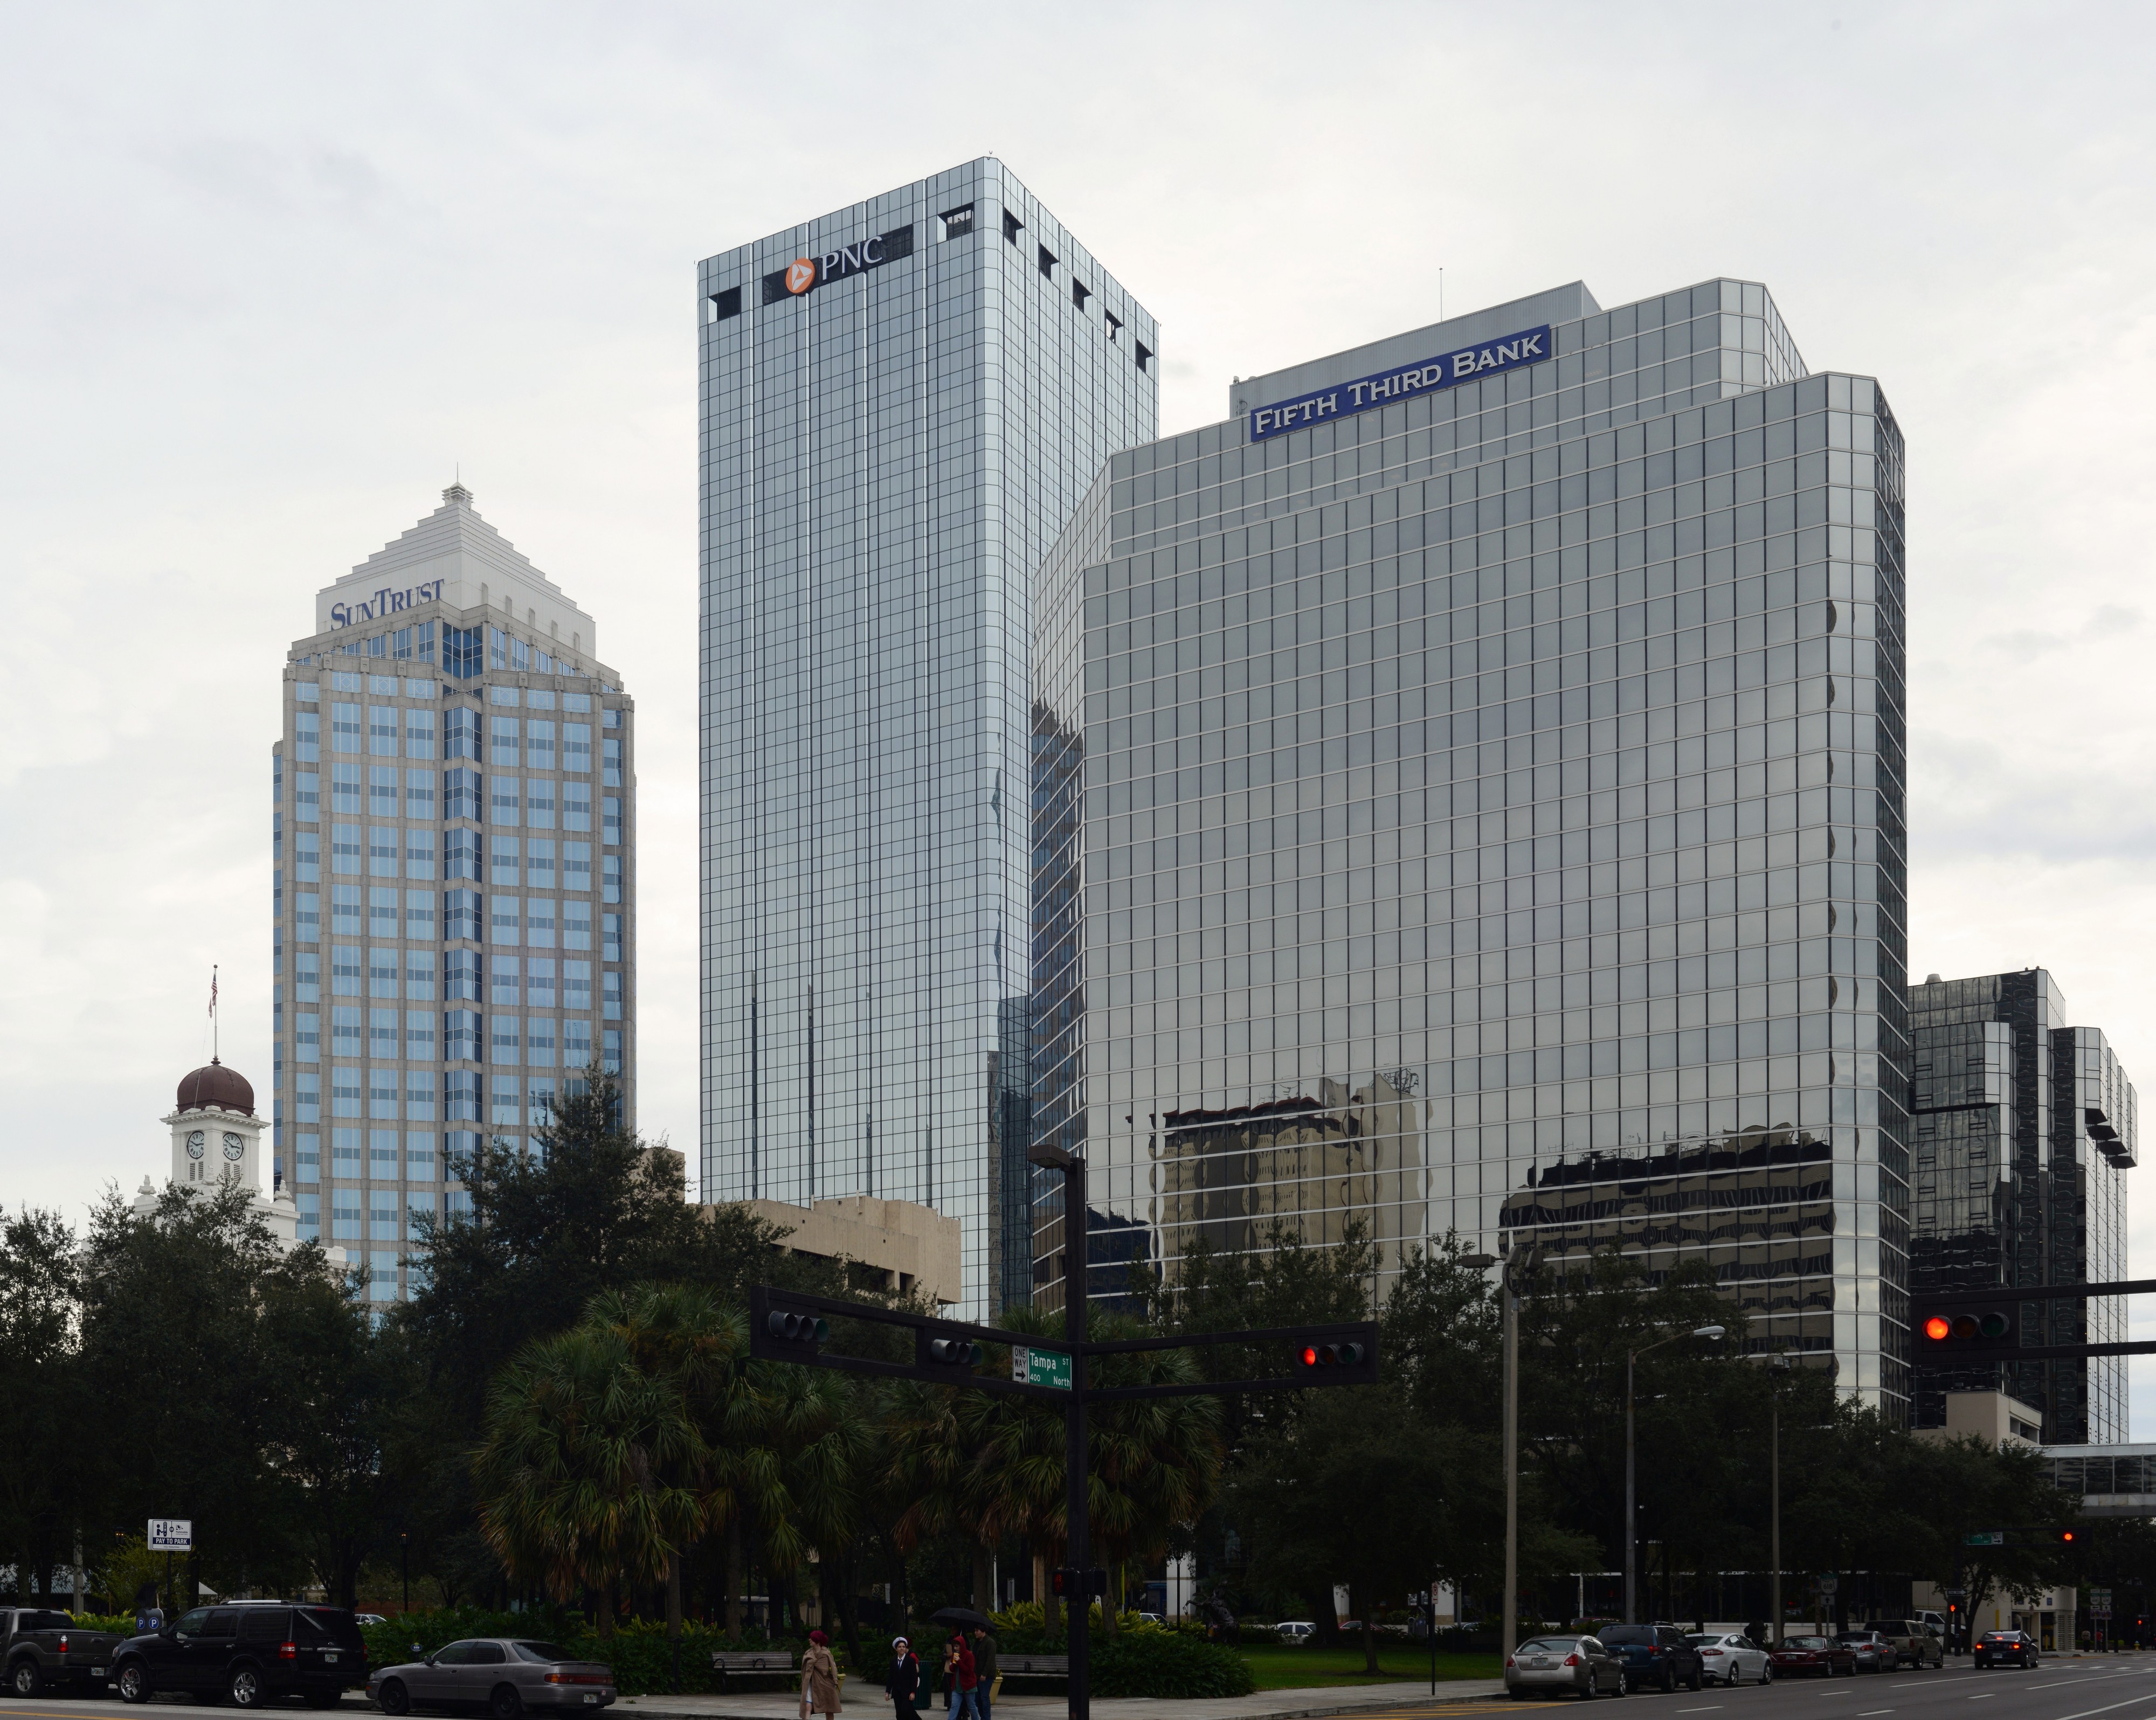 Tampa Florida November 2013-16a